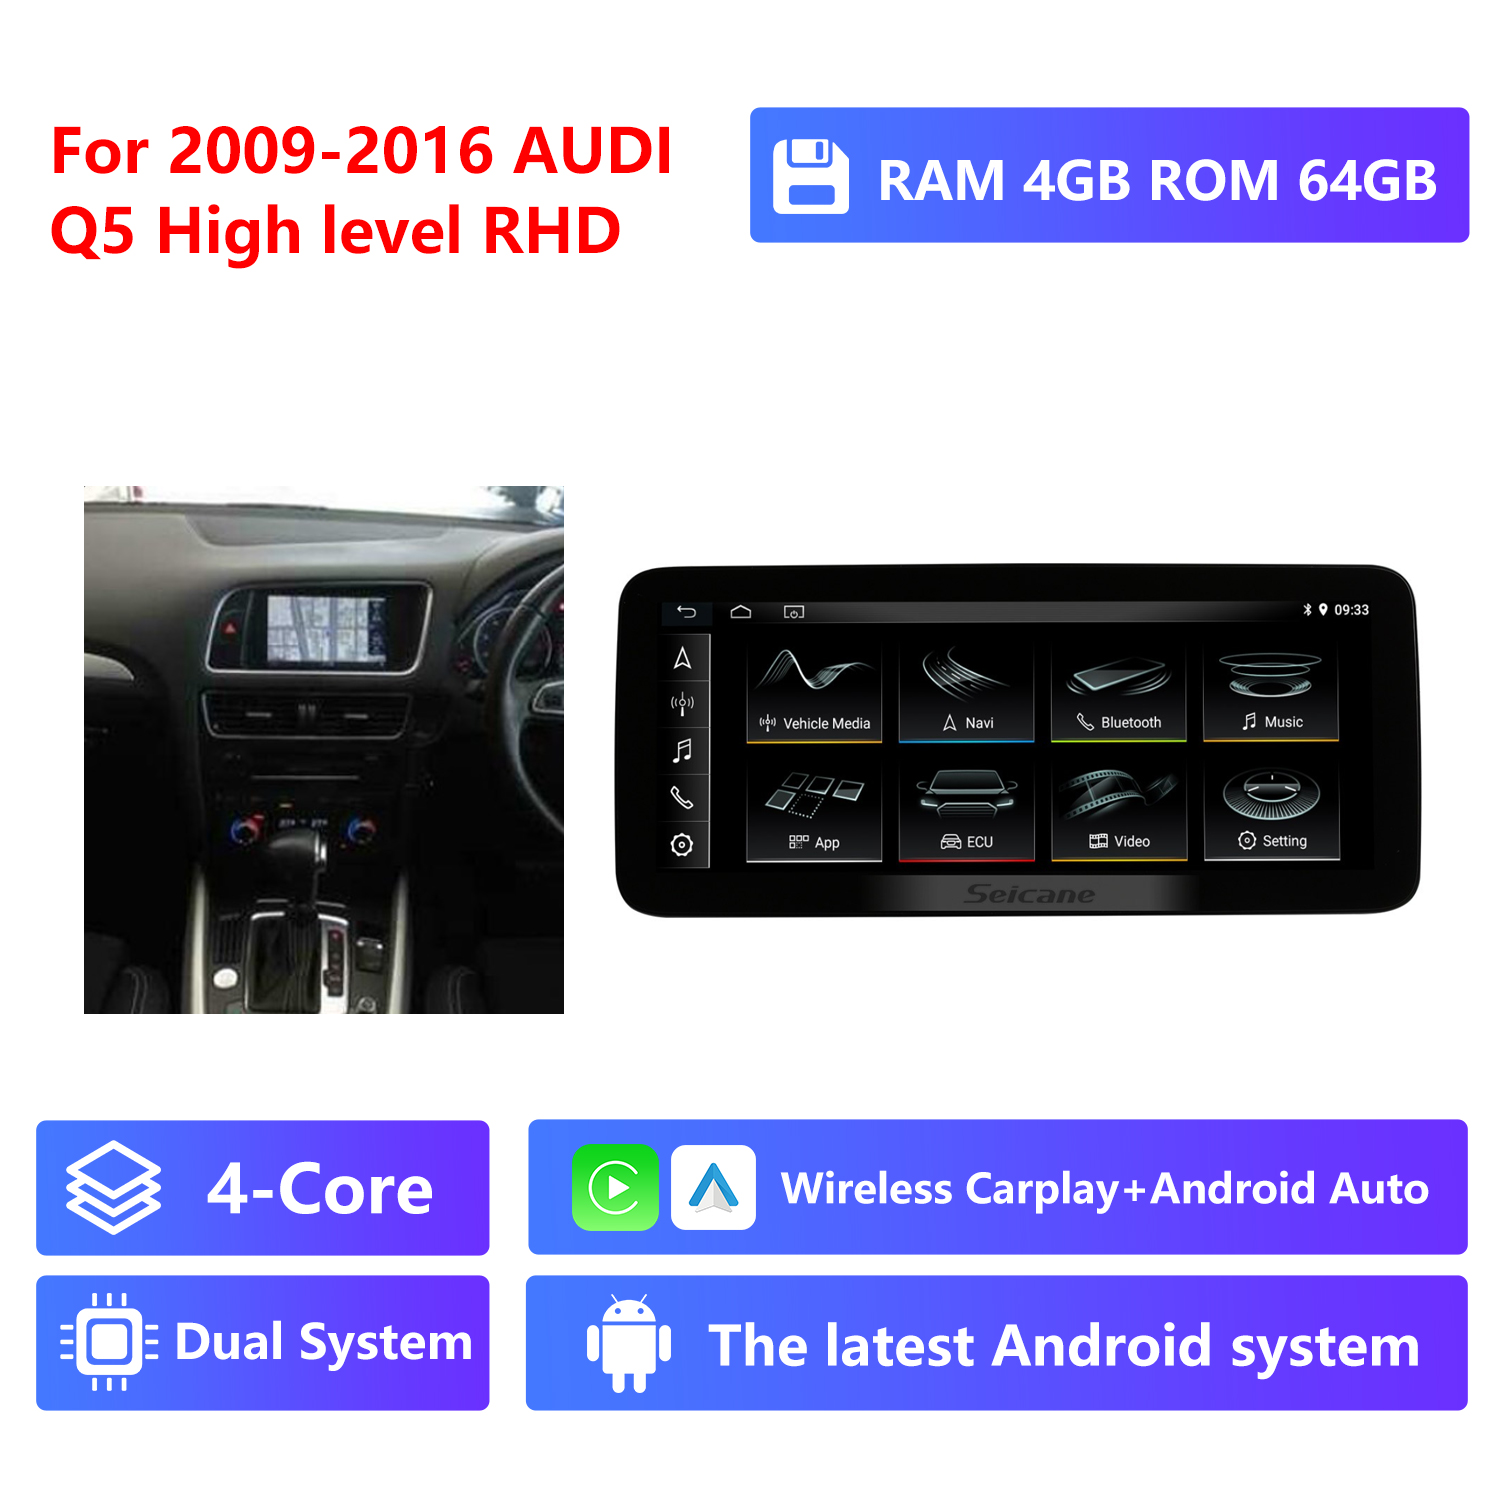 4-Core RAM 4G ROM 64G,2008-2016,High version,RHD